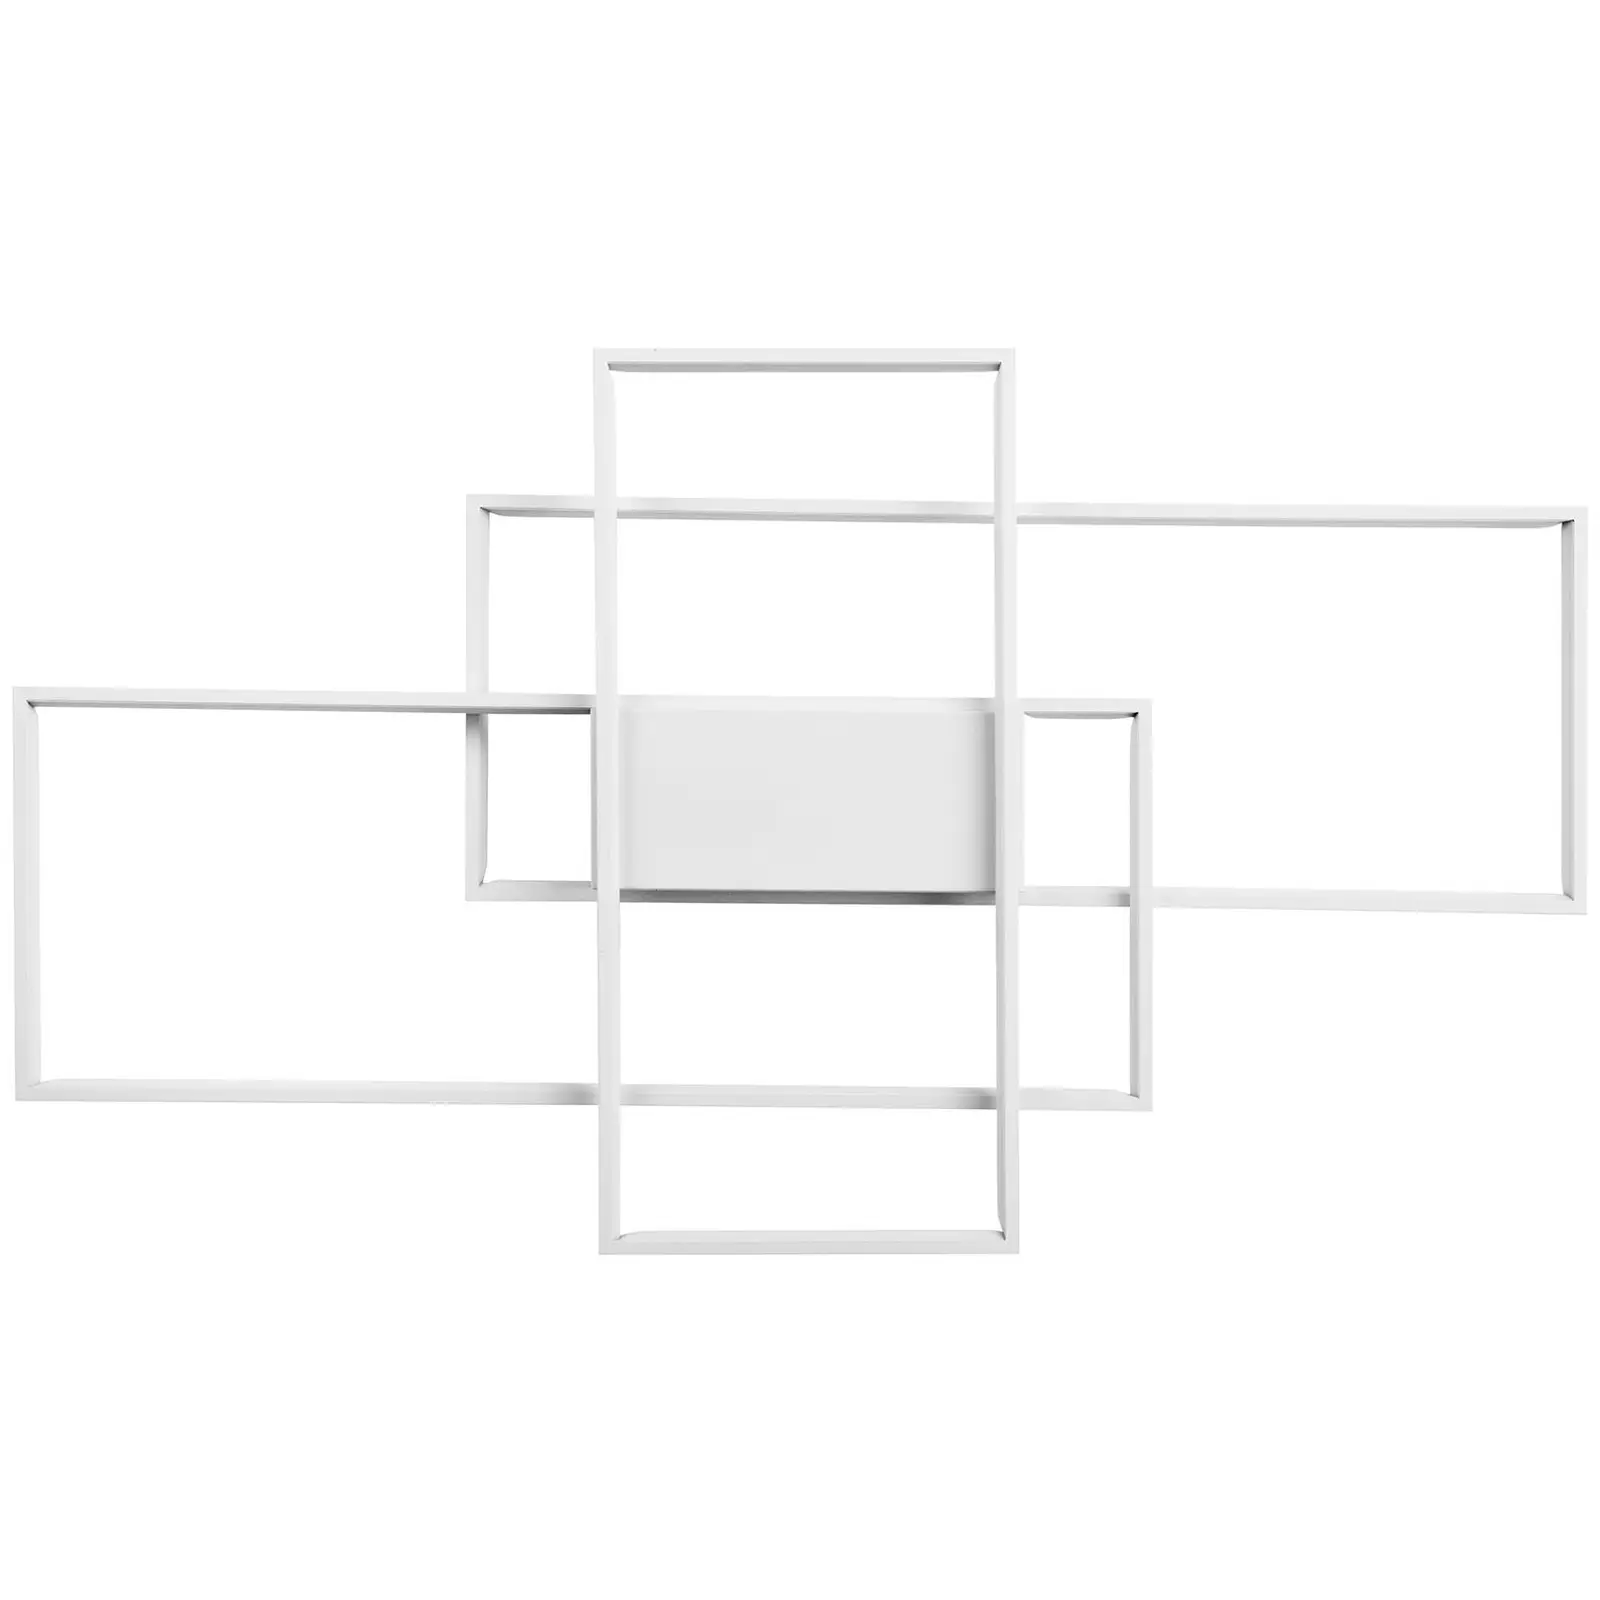 Plafonnier - 3 rectangles superposés - télécommande